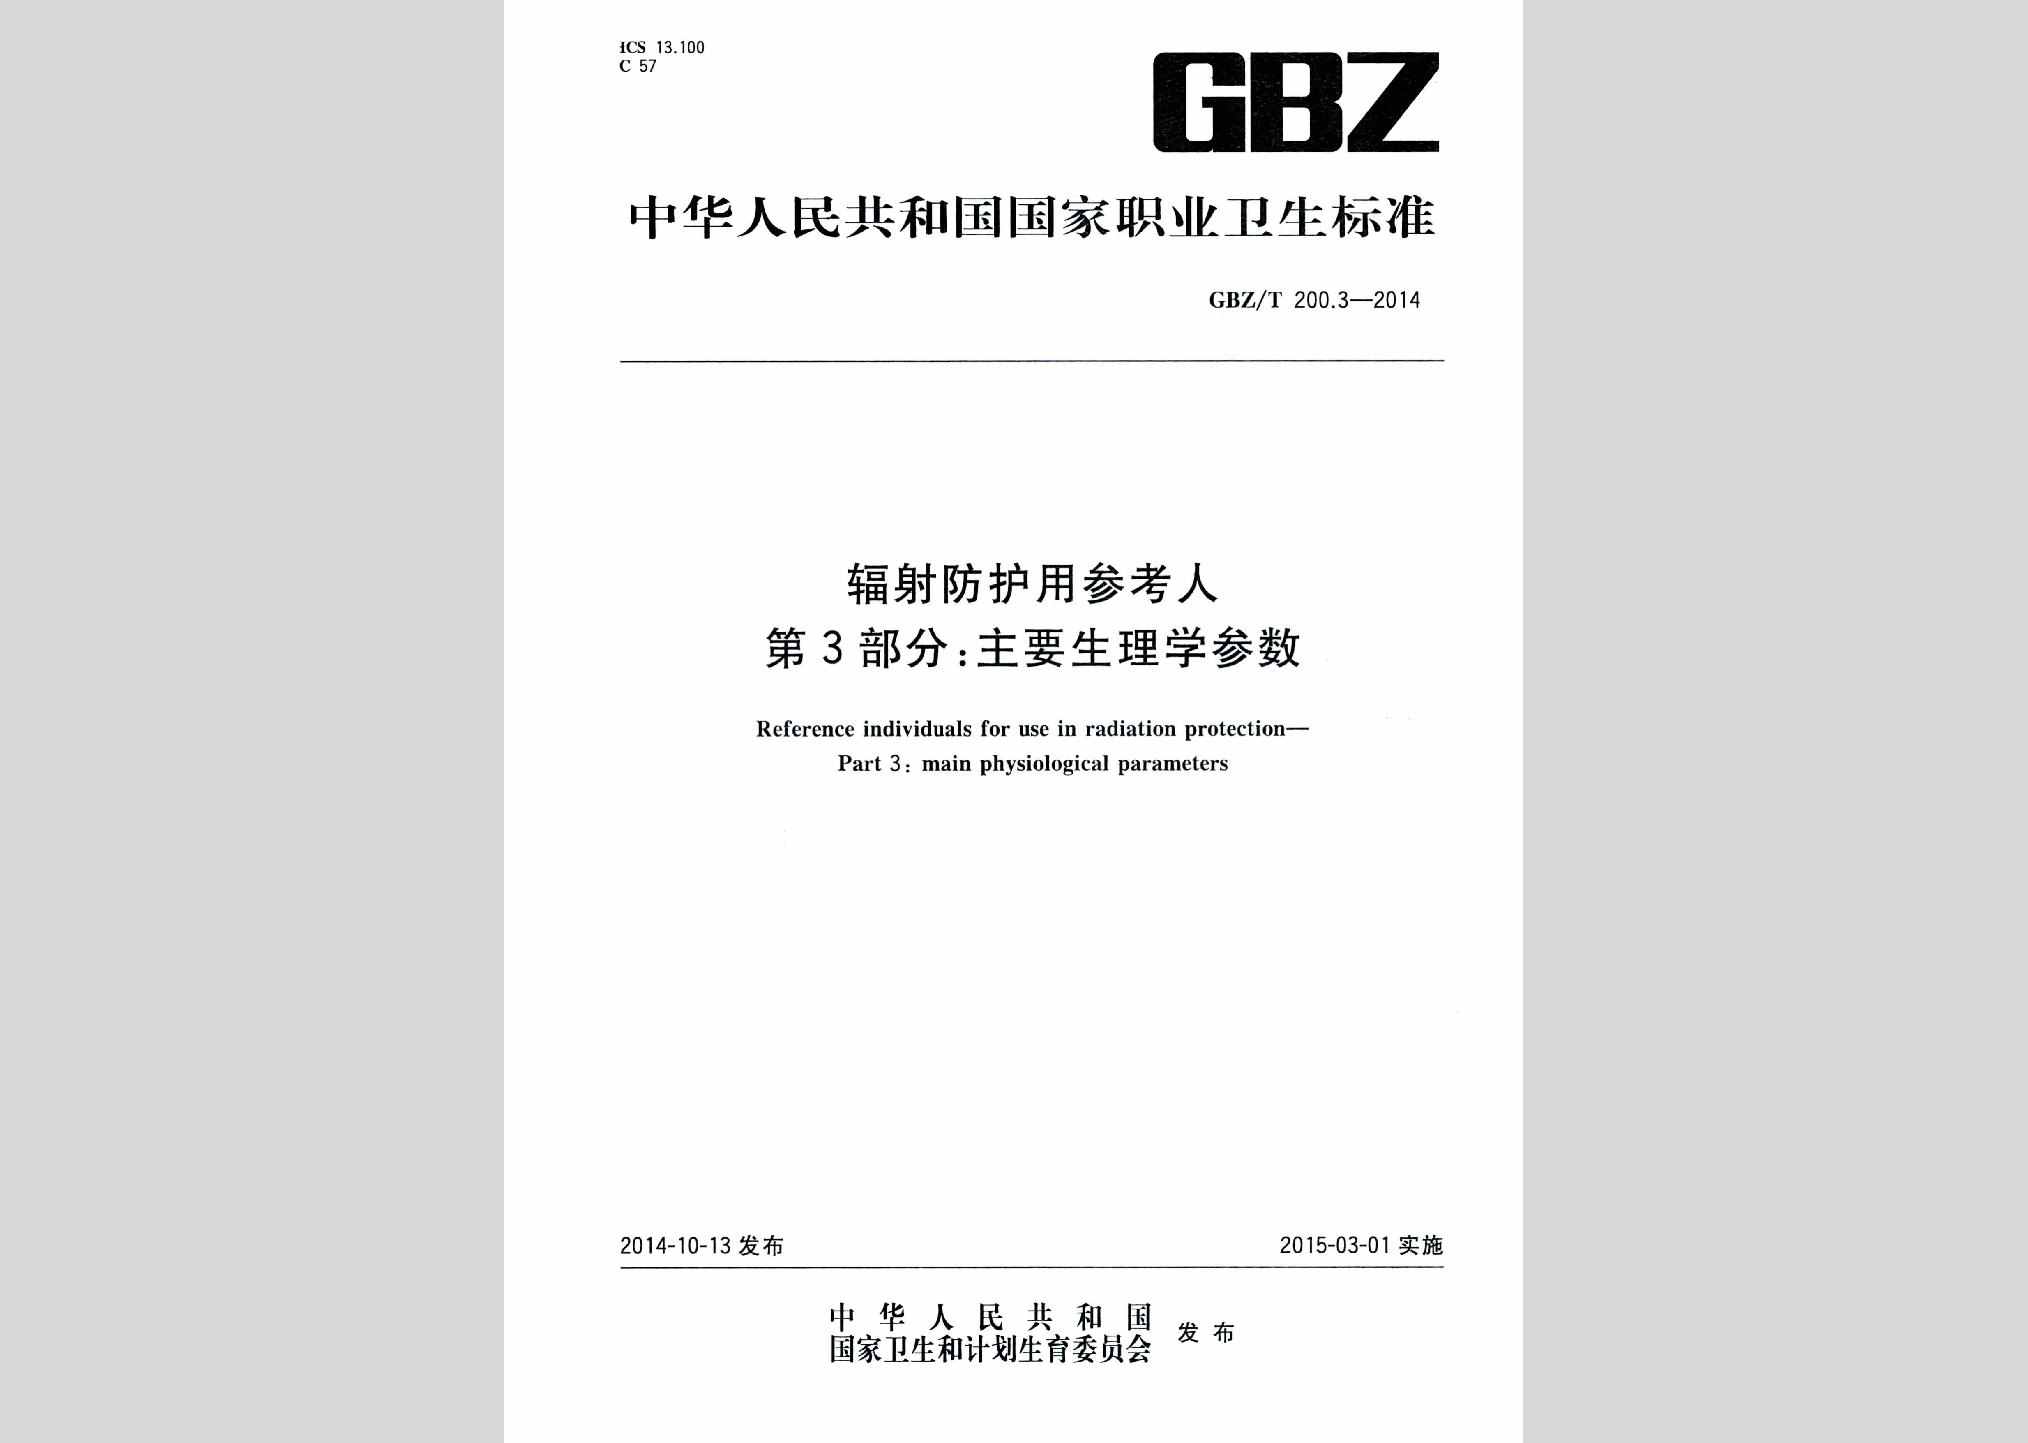 GBZ/T200.3-2014：辐射防护用参考人第3部分:主要生理学参数